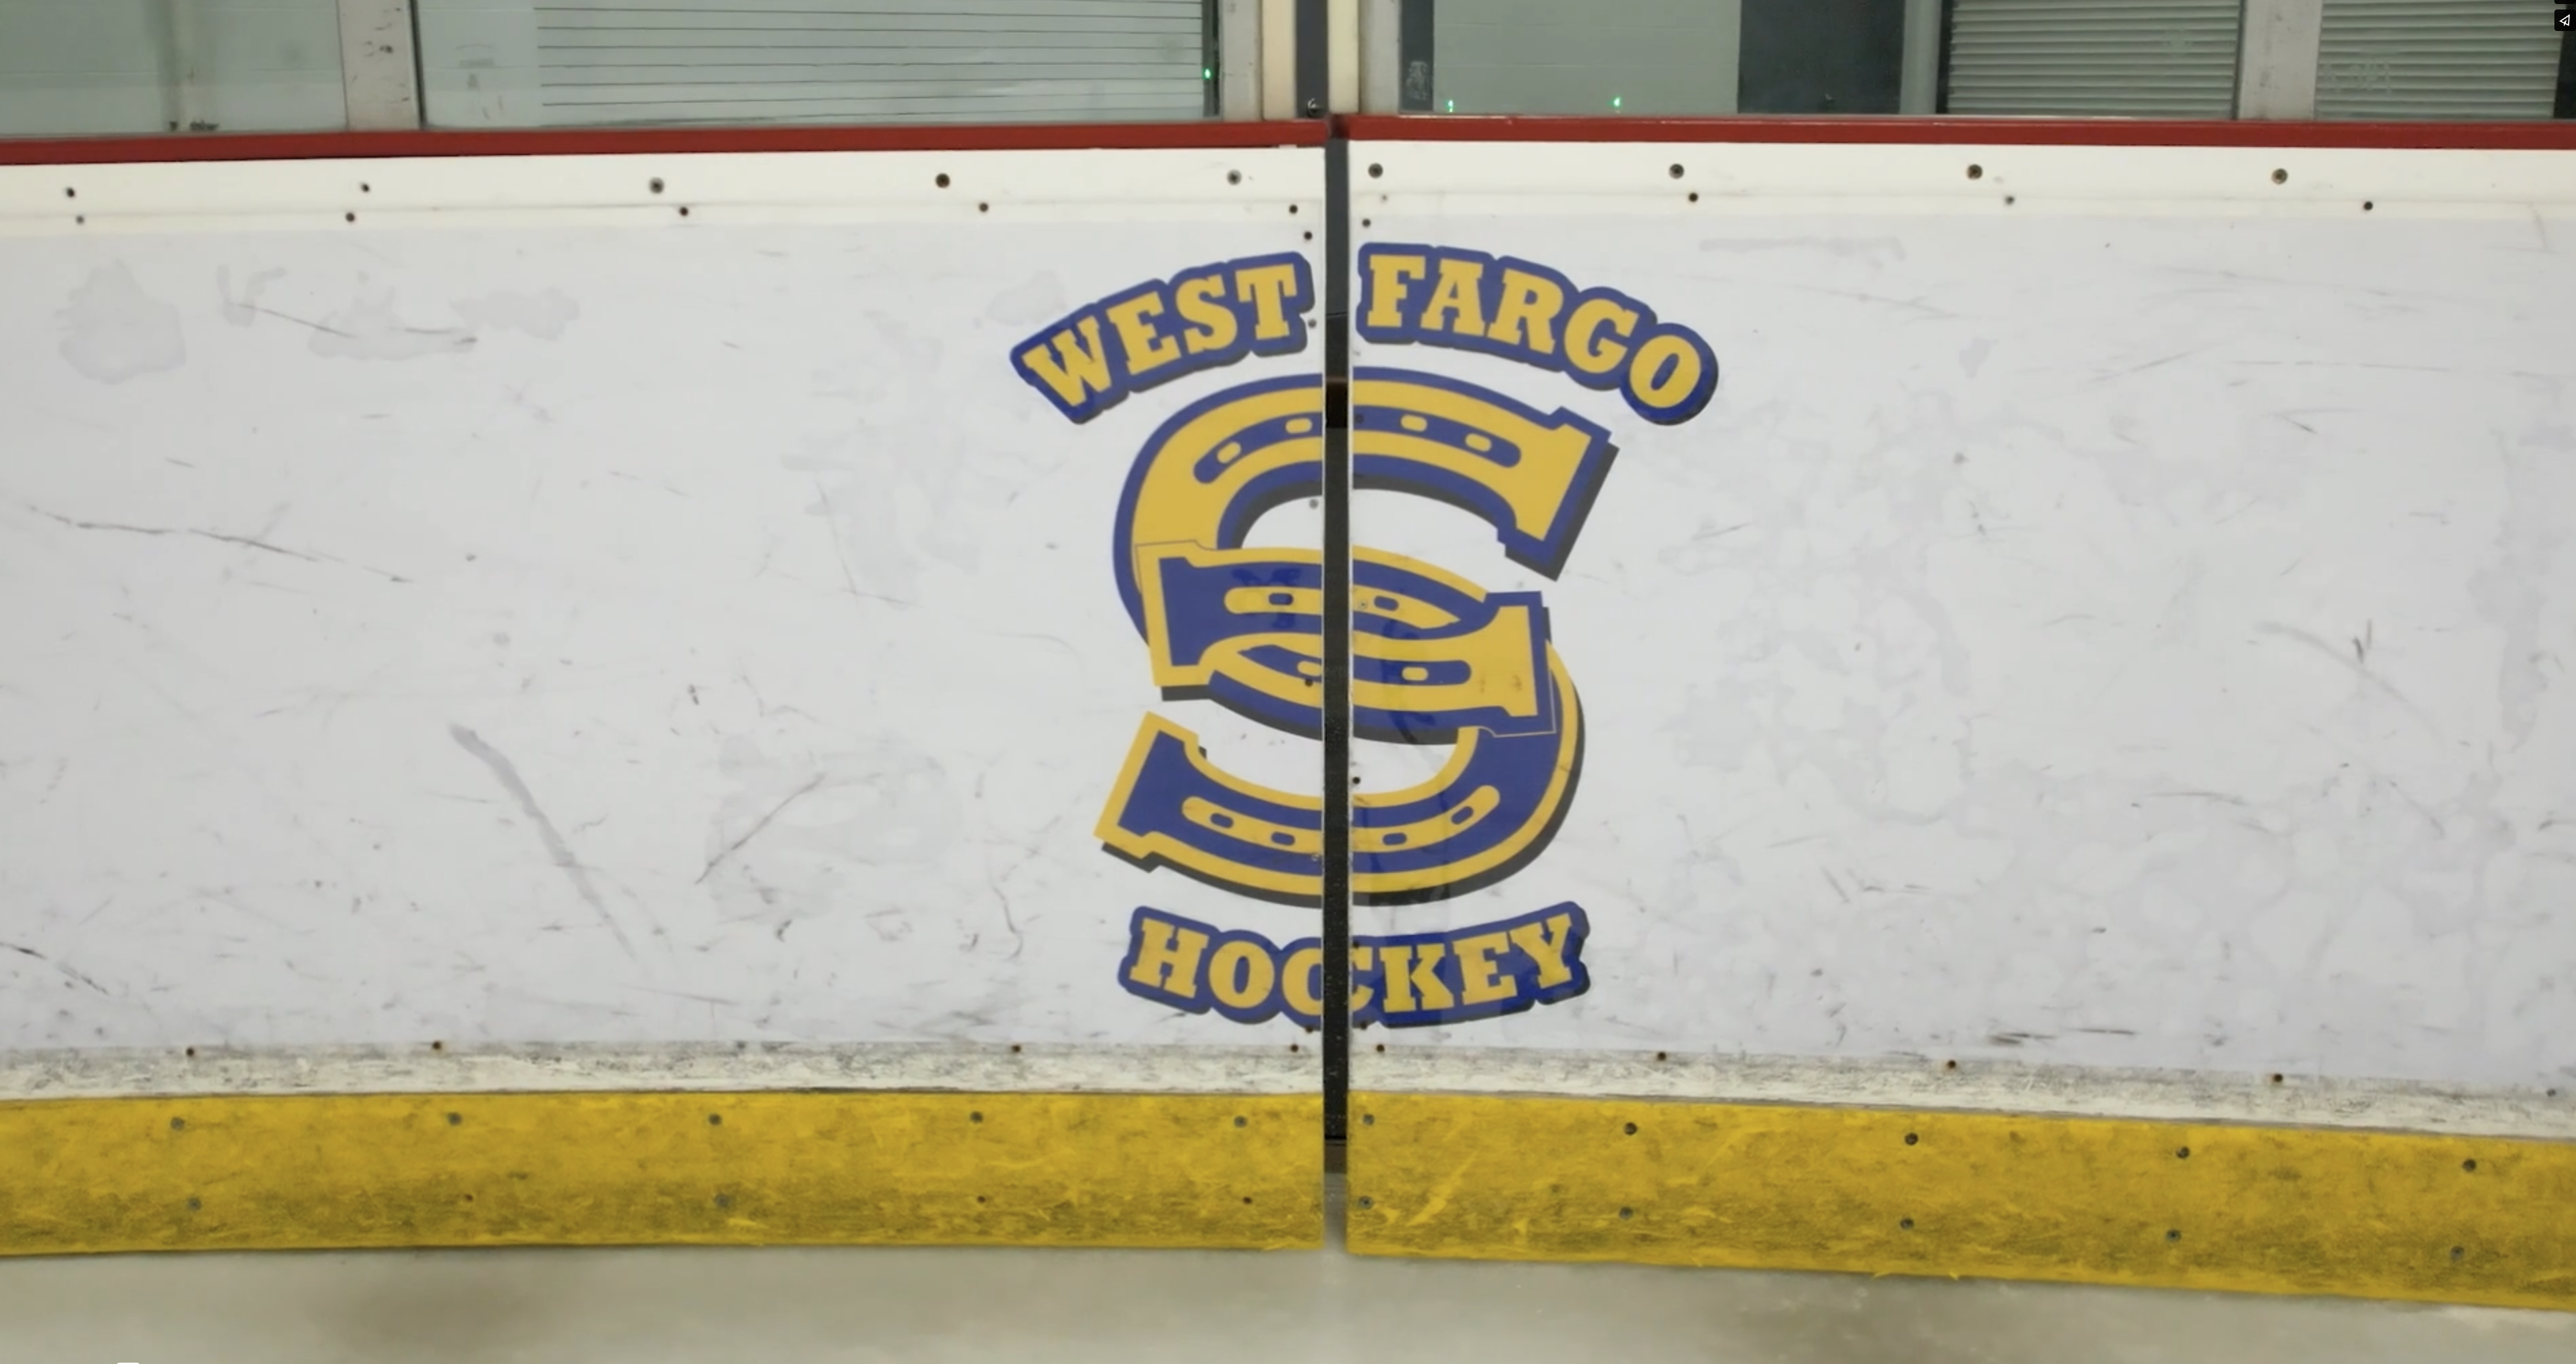 West Fargo Hockey Association: Capital Campaign Film